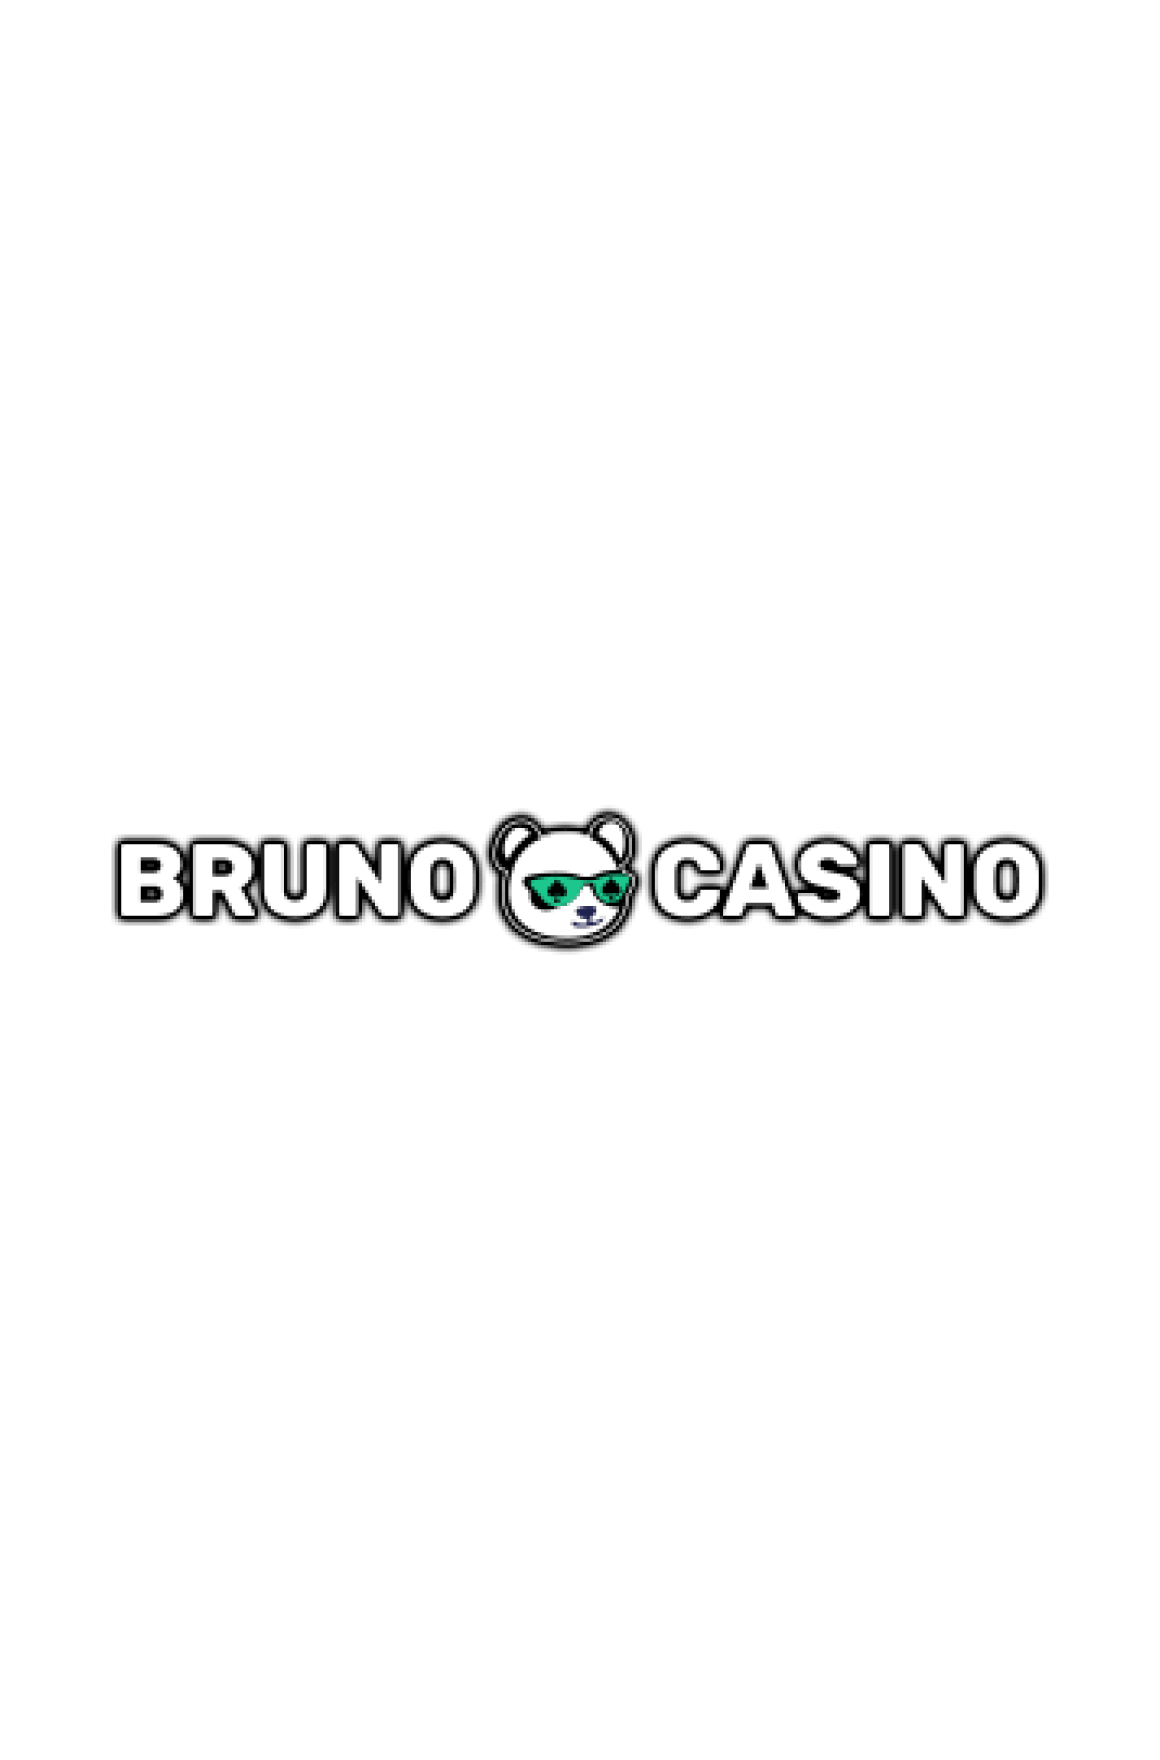 Brunocasino